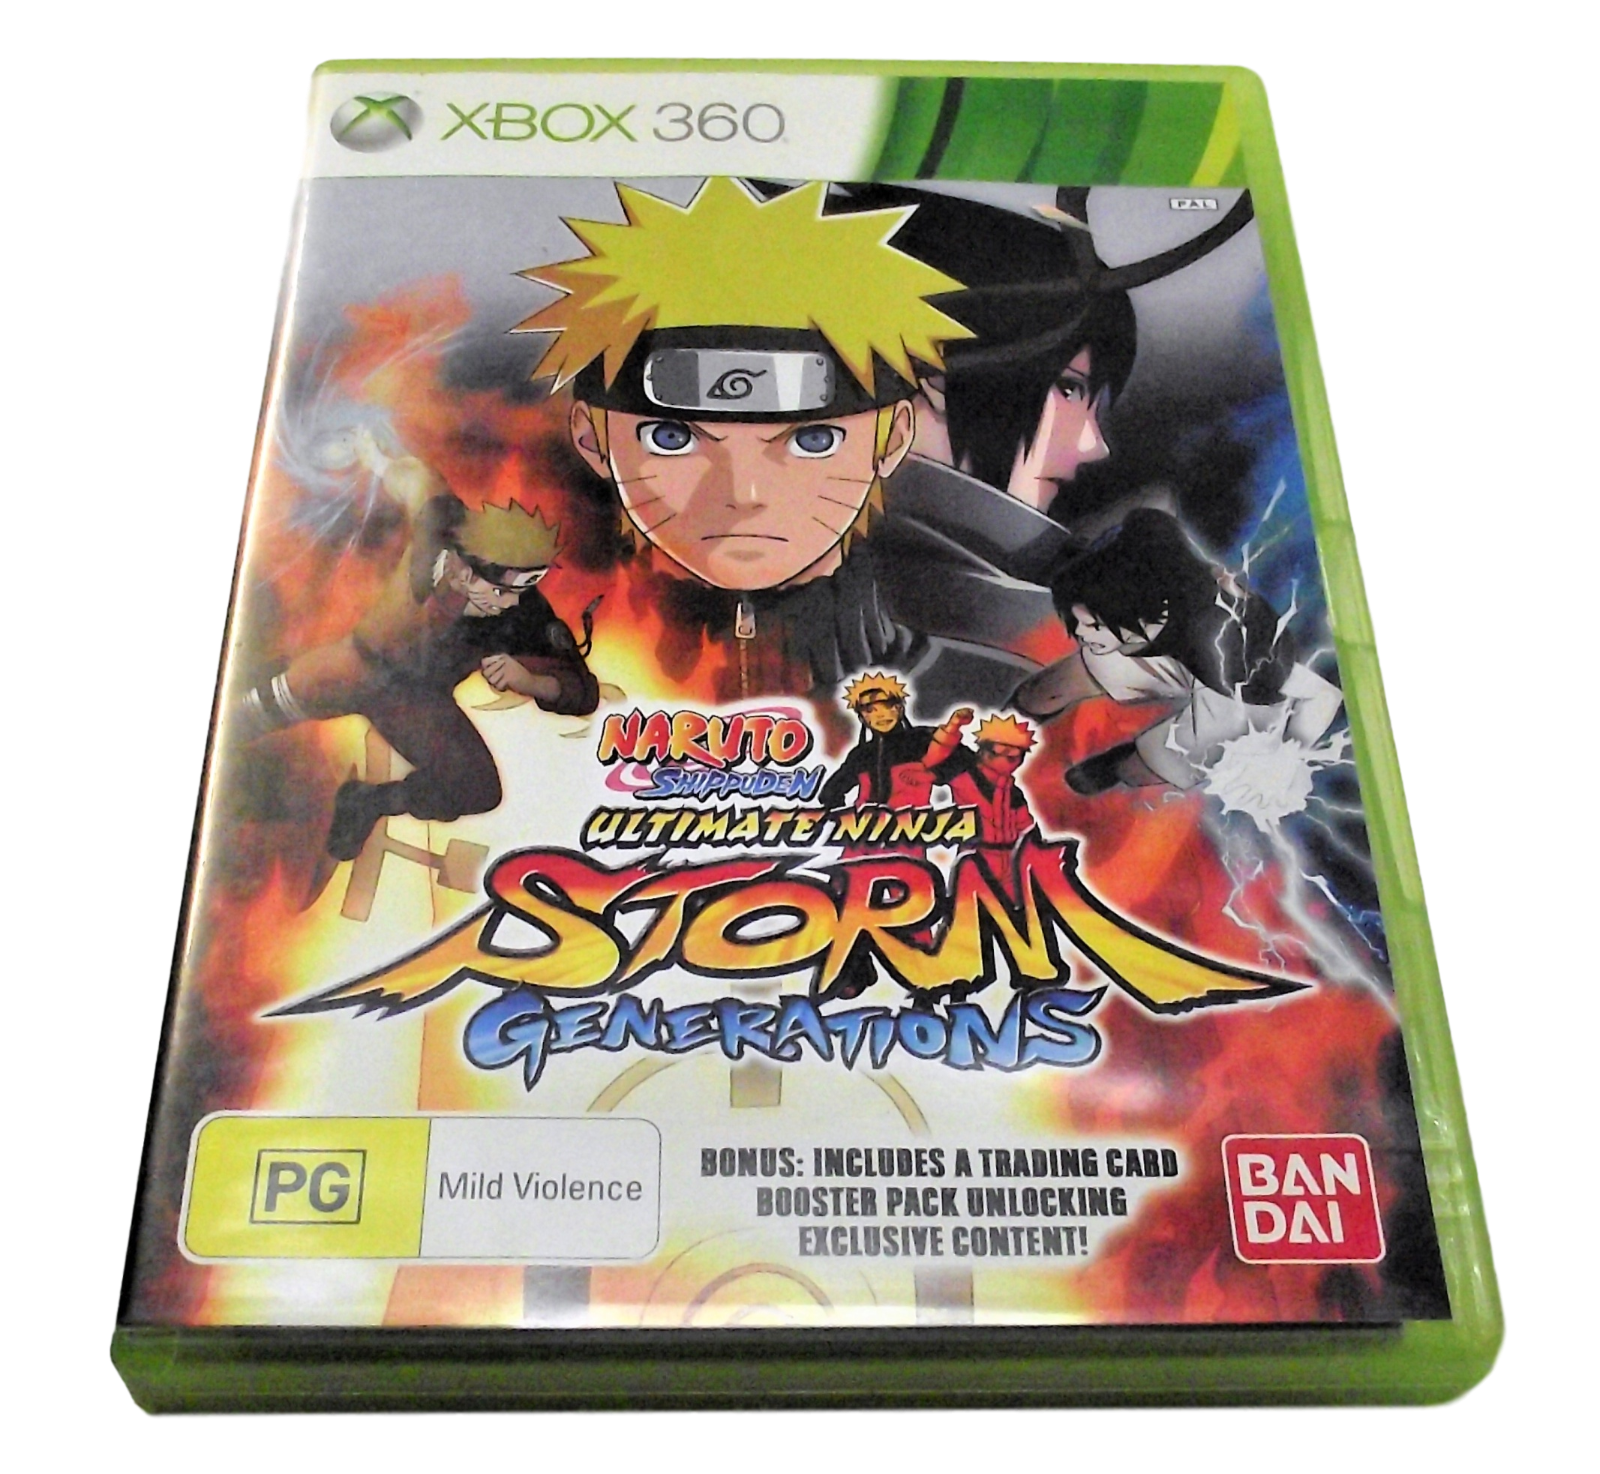 Naruto Shippuden: Ultimate Ninja Storm Generations - xbox 360 em Promoção  na Americanas